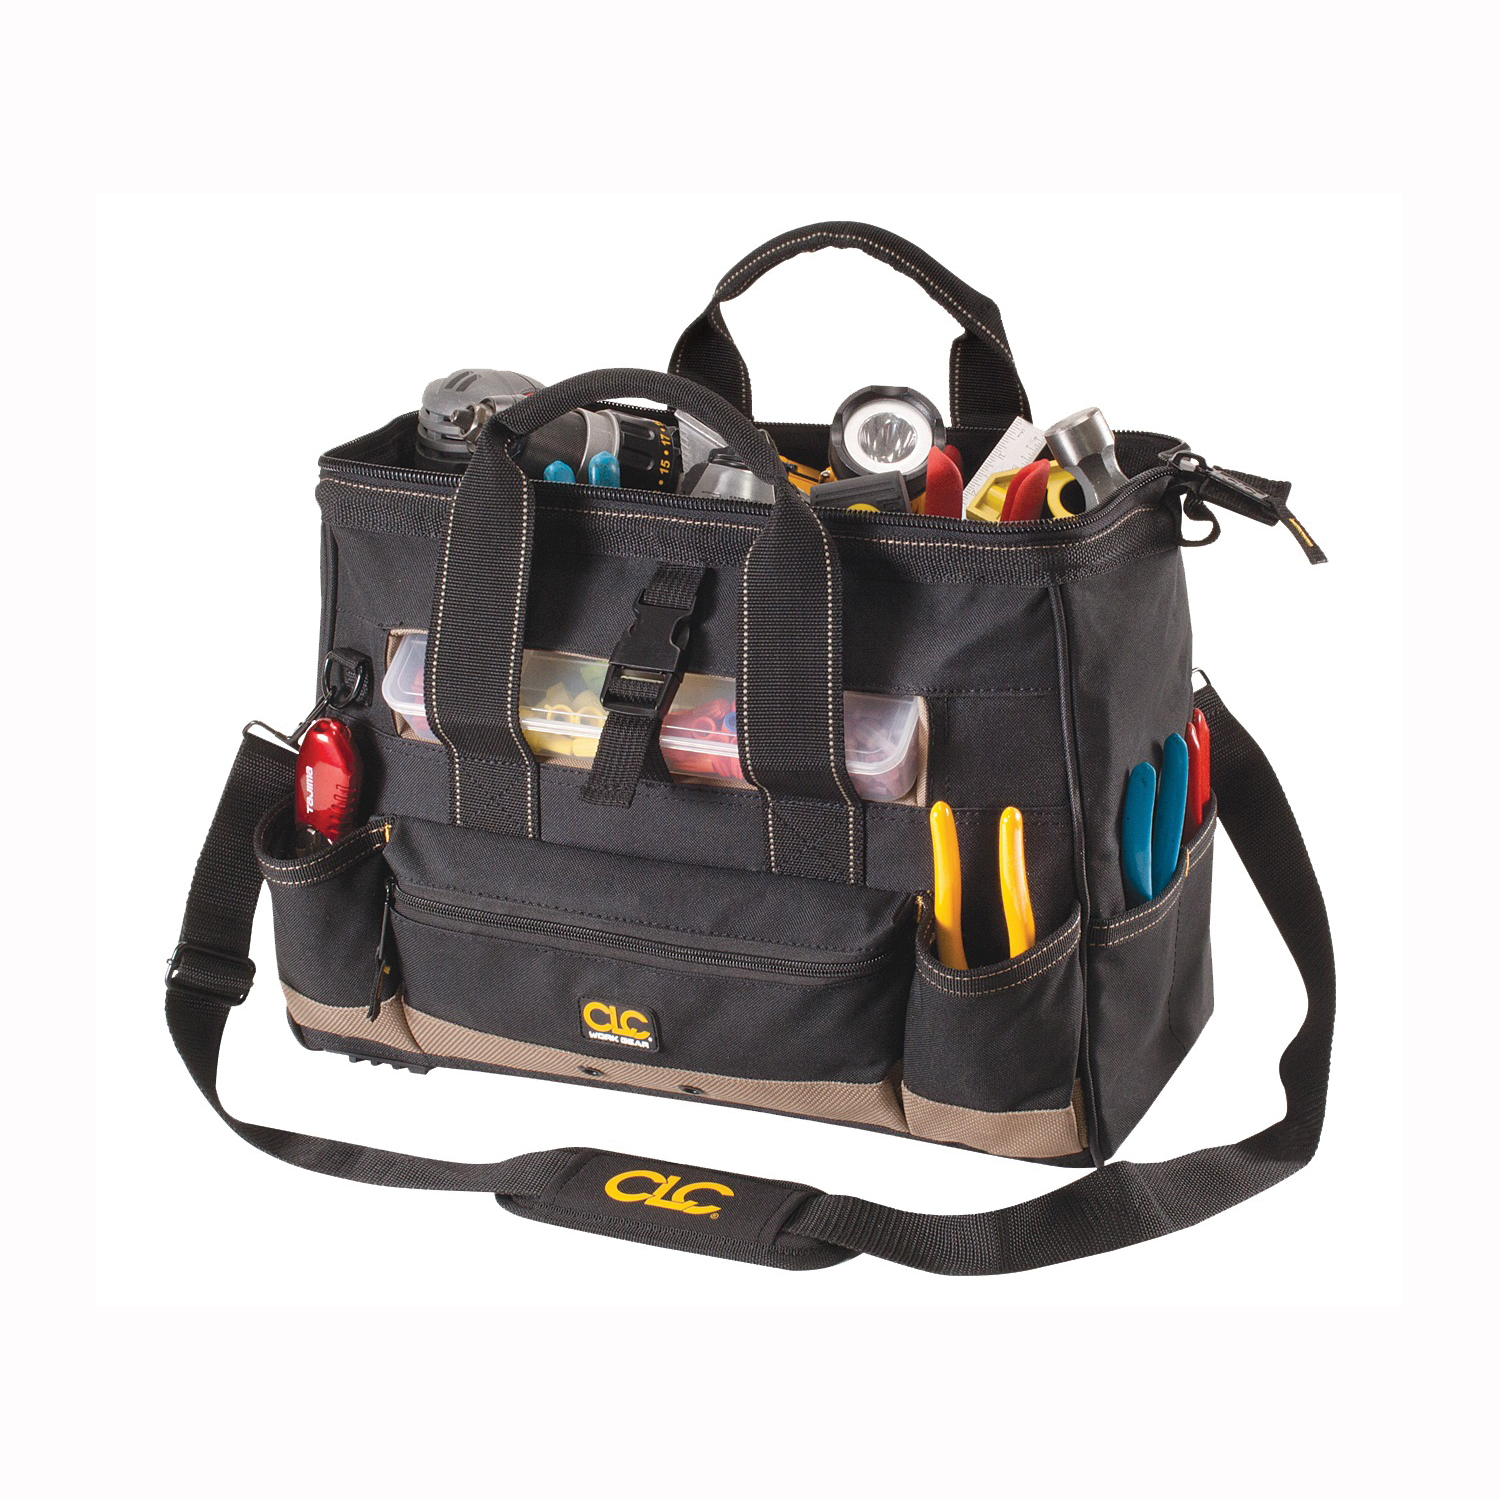 Buy CLC 25-Pocket Tool Bag with Top-Side Tray Black/Tan